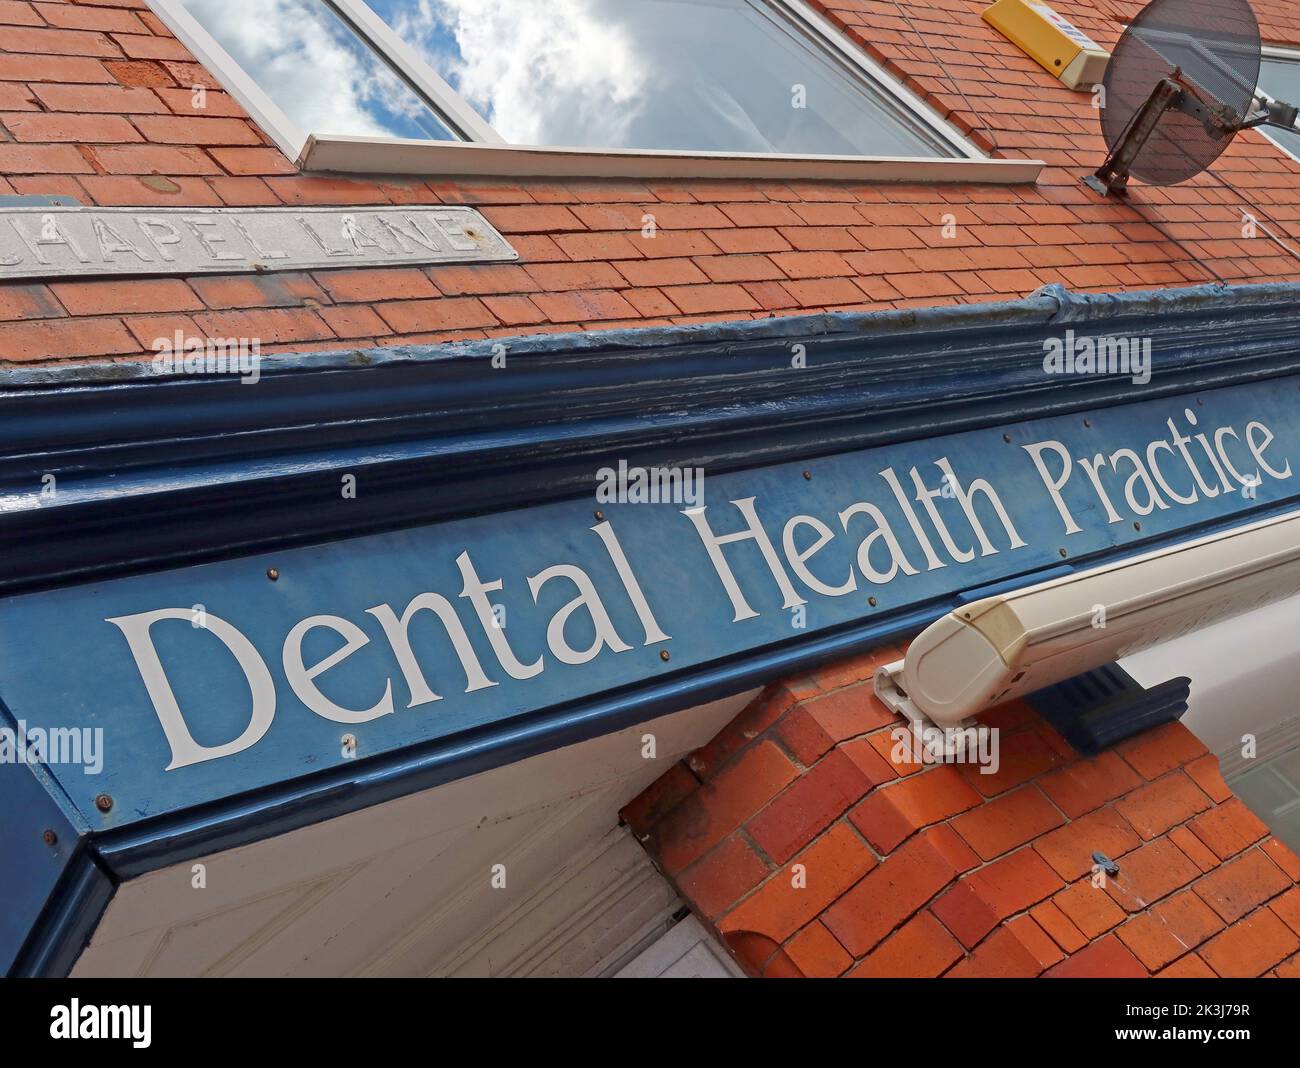 Dentists in Stockton Heath, Warrington, Cheshire, Dental Health Practice Stock Photo